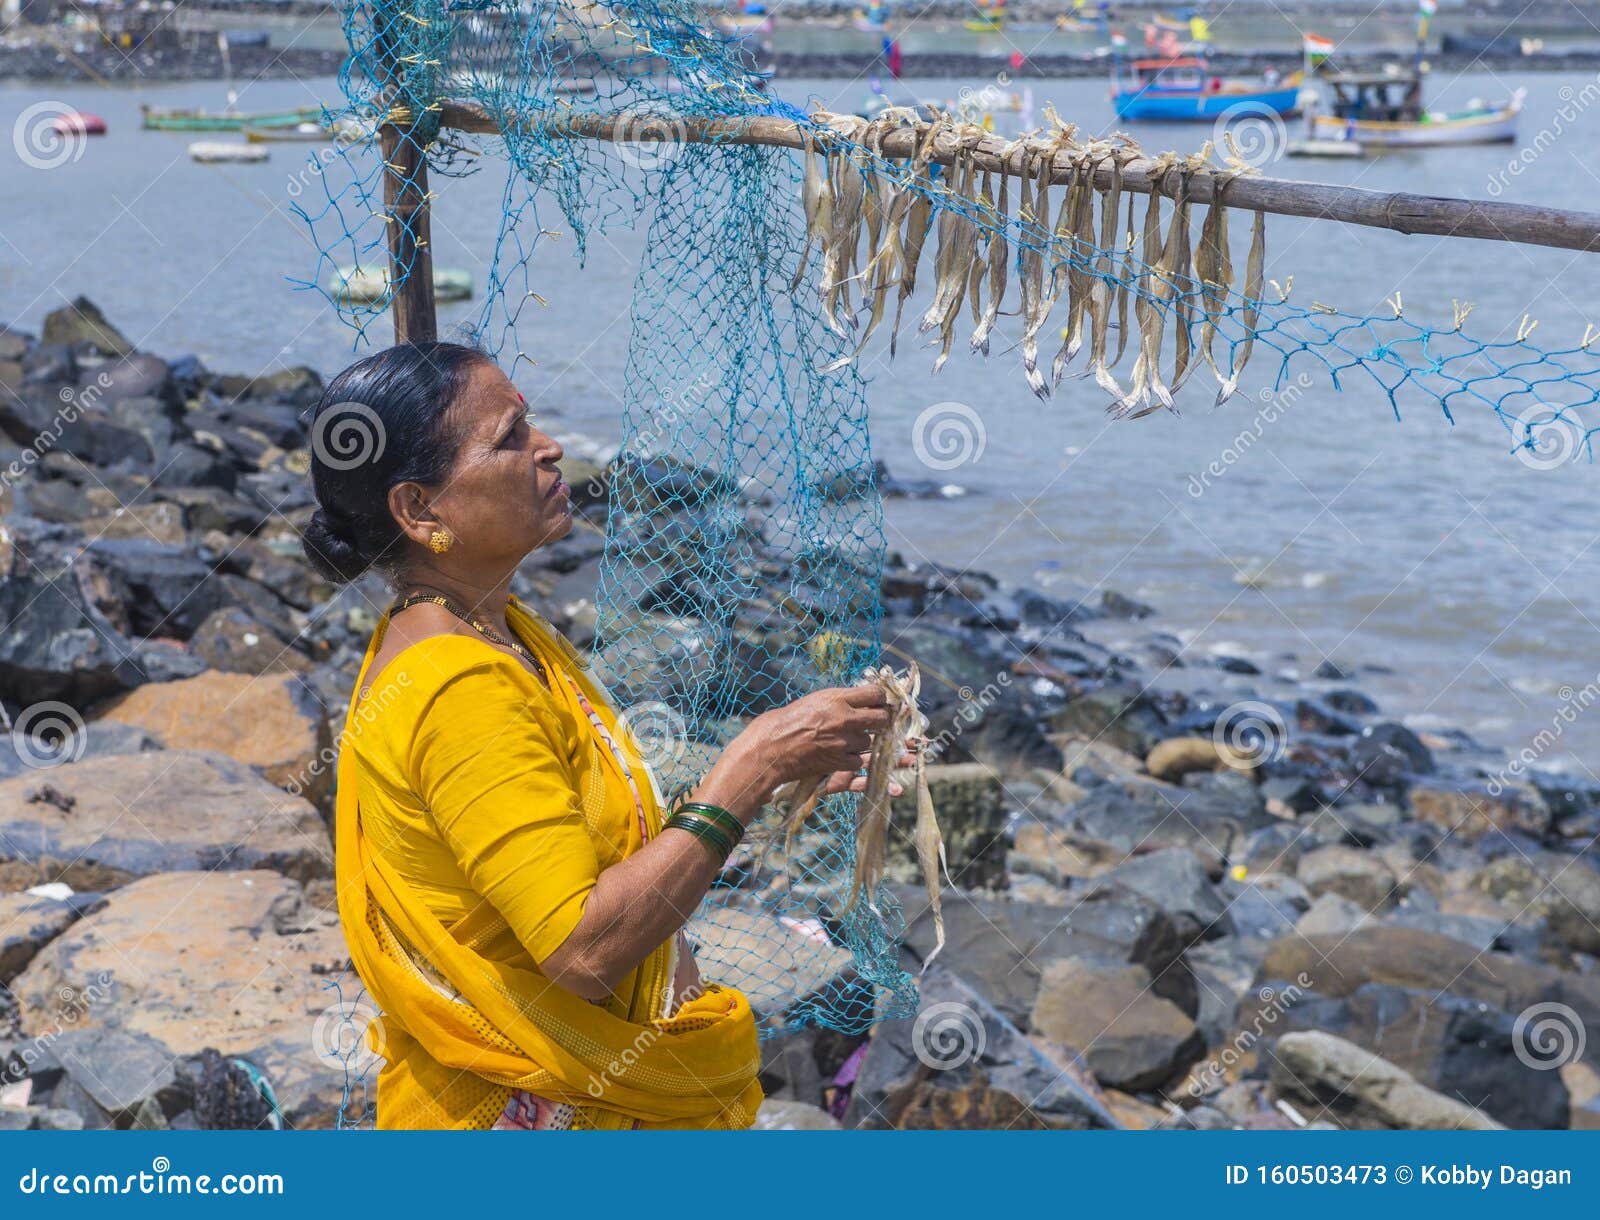 Stock photo of Throw-net fisherman fishing in Pulicat Lake, Tamil